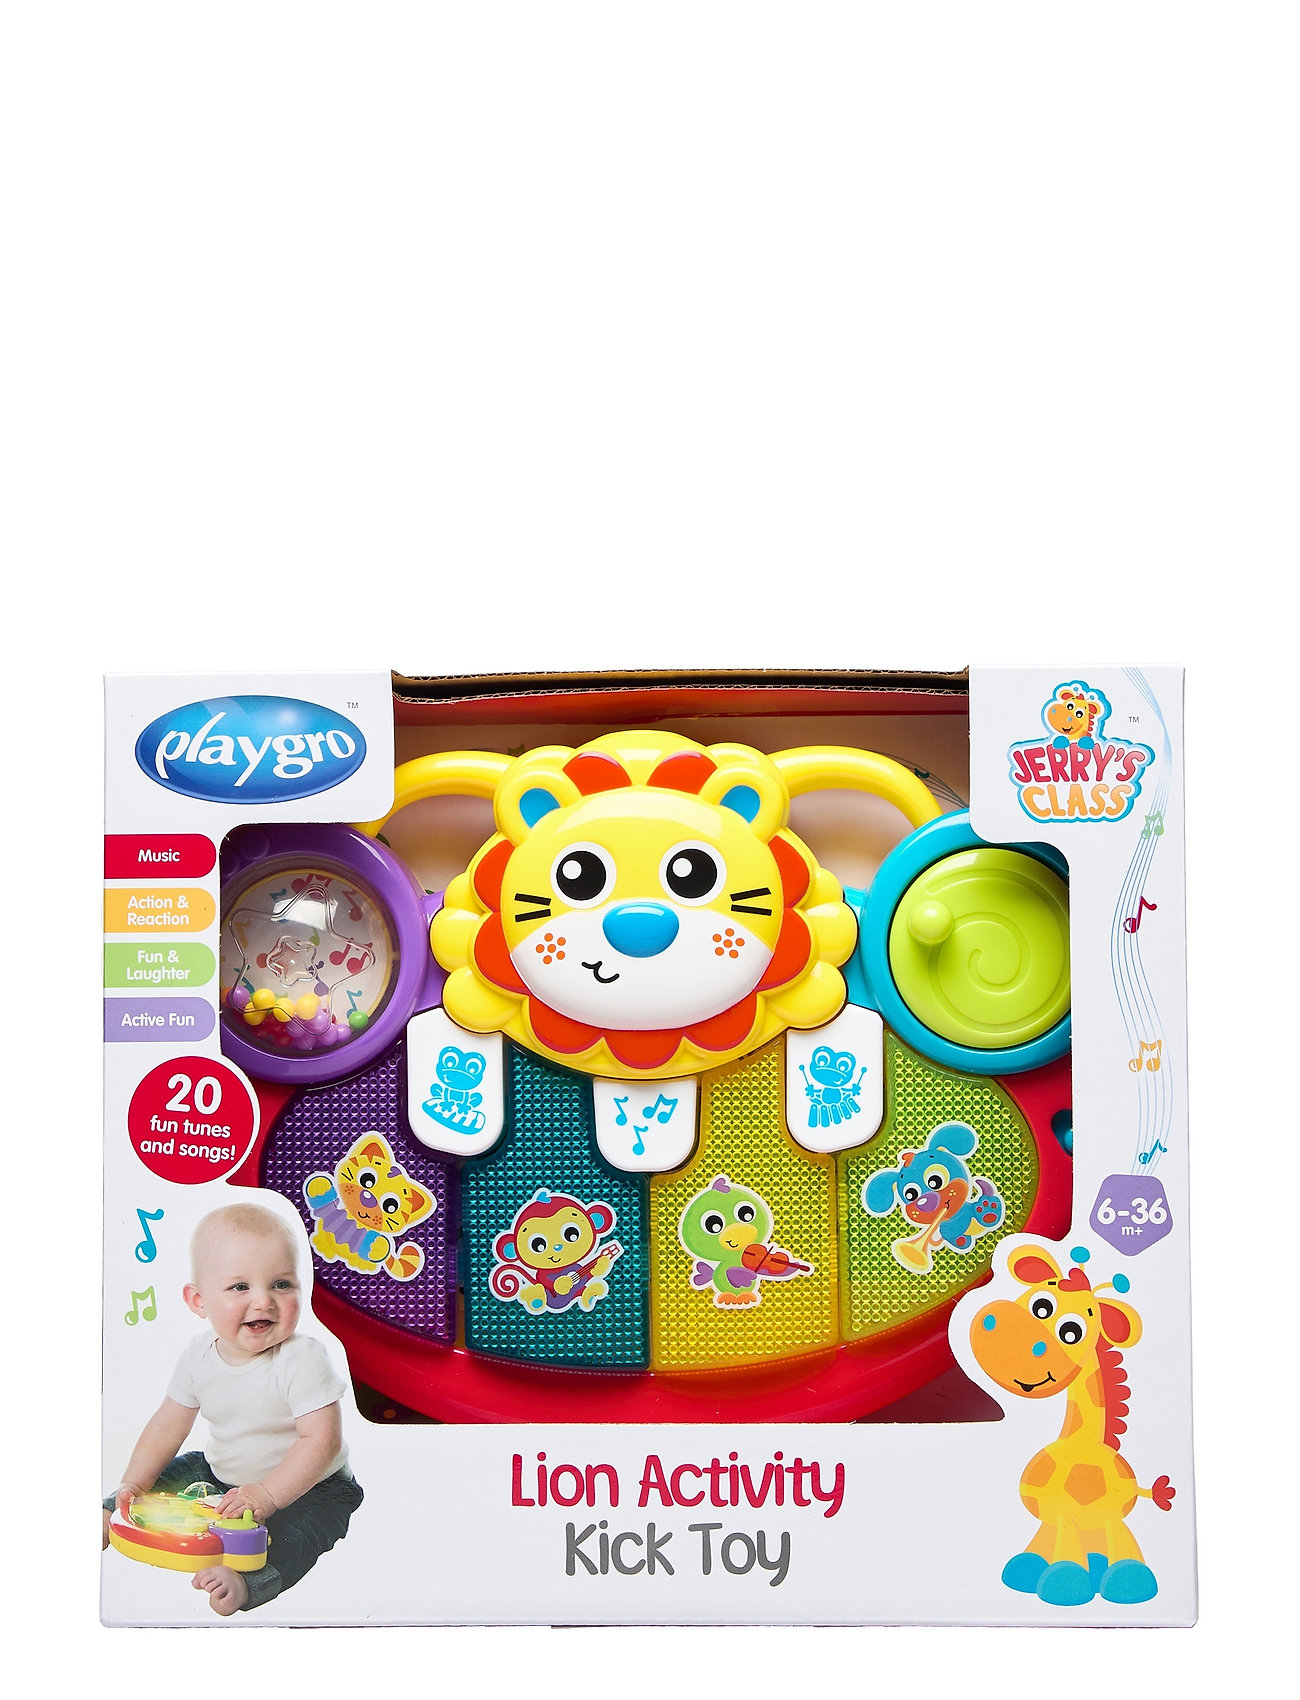 Lion Activity Kick Toy Piano Toys Baby Toys Educational Toys Activity Toys Multi/mönstrad Playgro